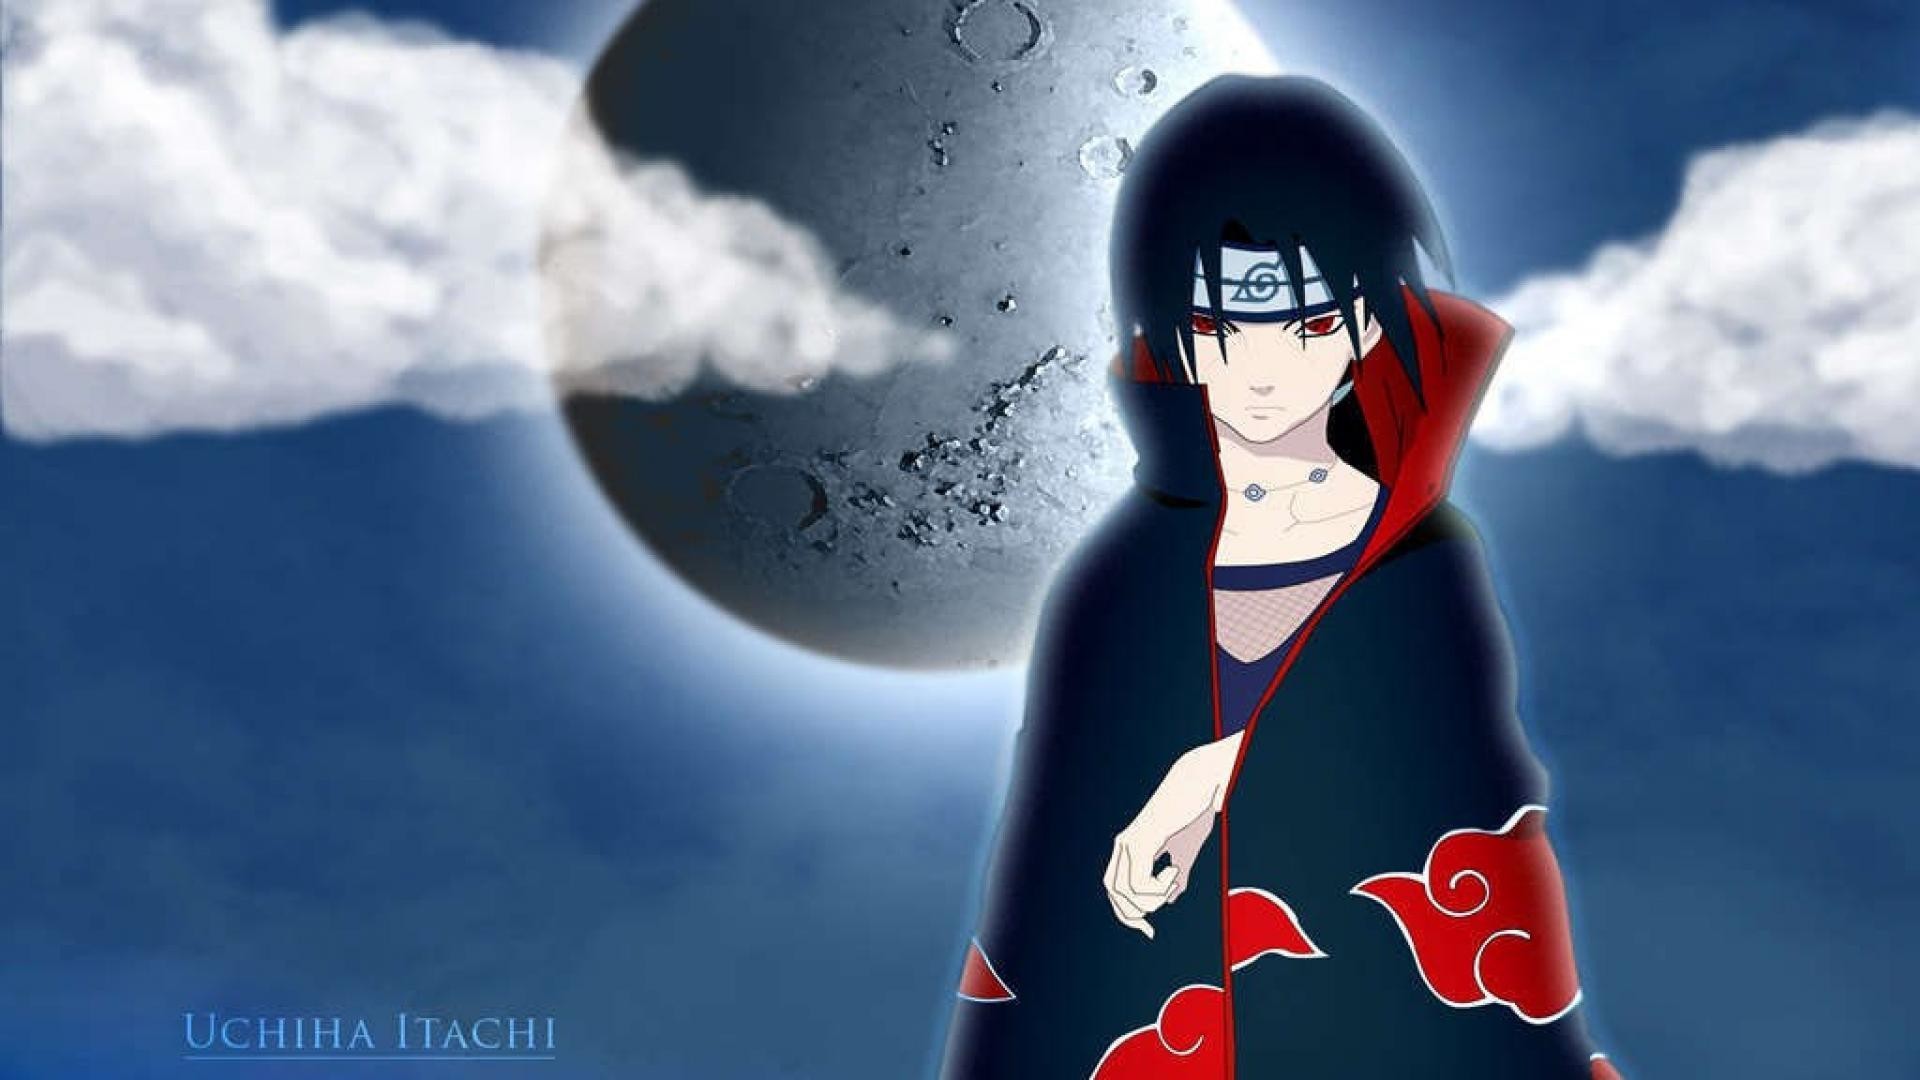 Akatsuki Naruto Itachi Uchiha In Color Background HD Anime Wallpapers  HD  Wallpapers  ID 37146